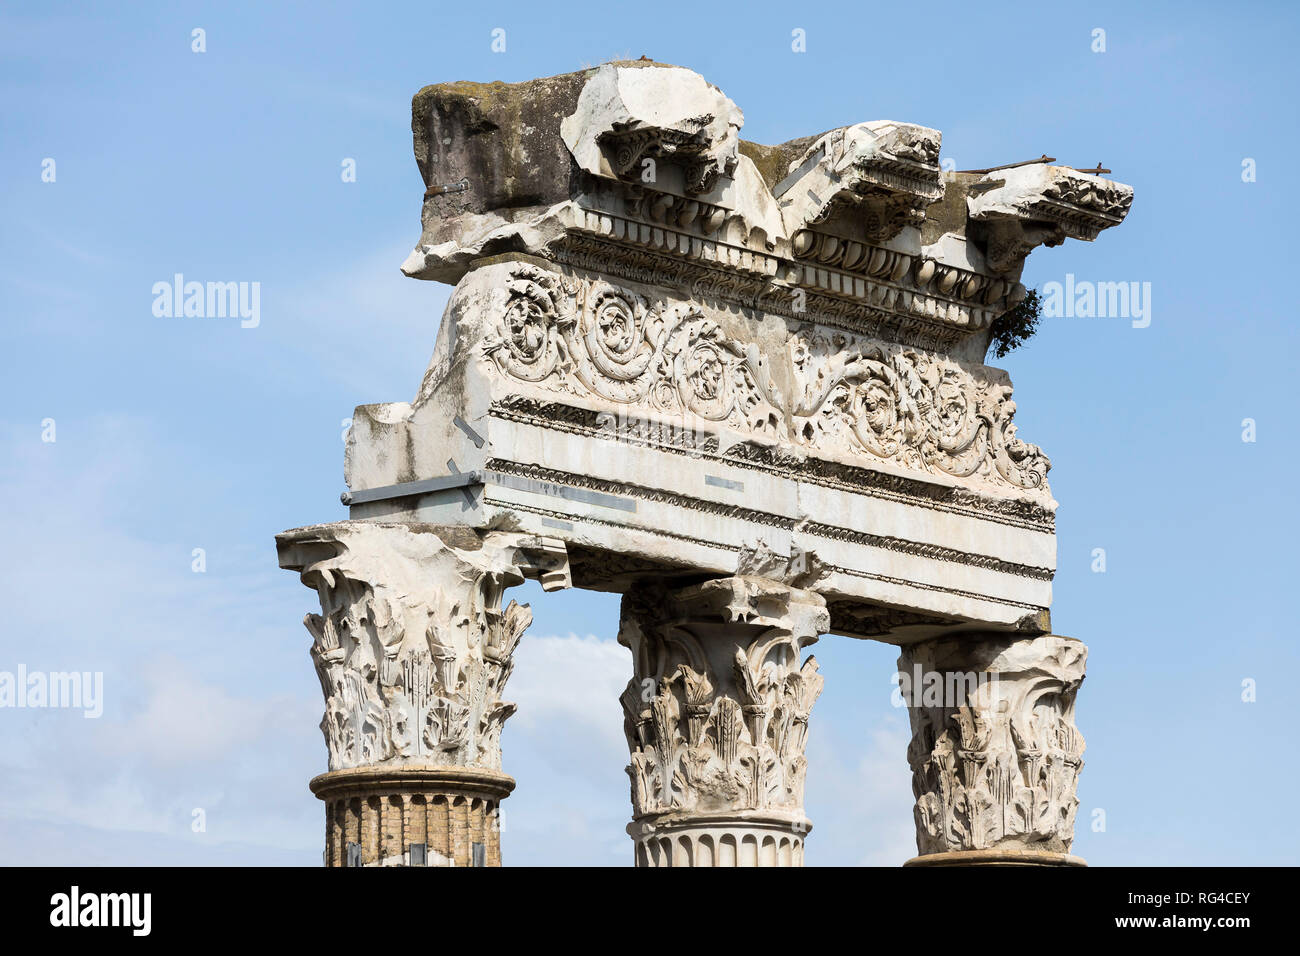 Temple romain antique demeure, Forum Romain, Rome, Italie, Europe Banque D'Images